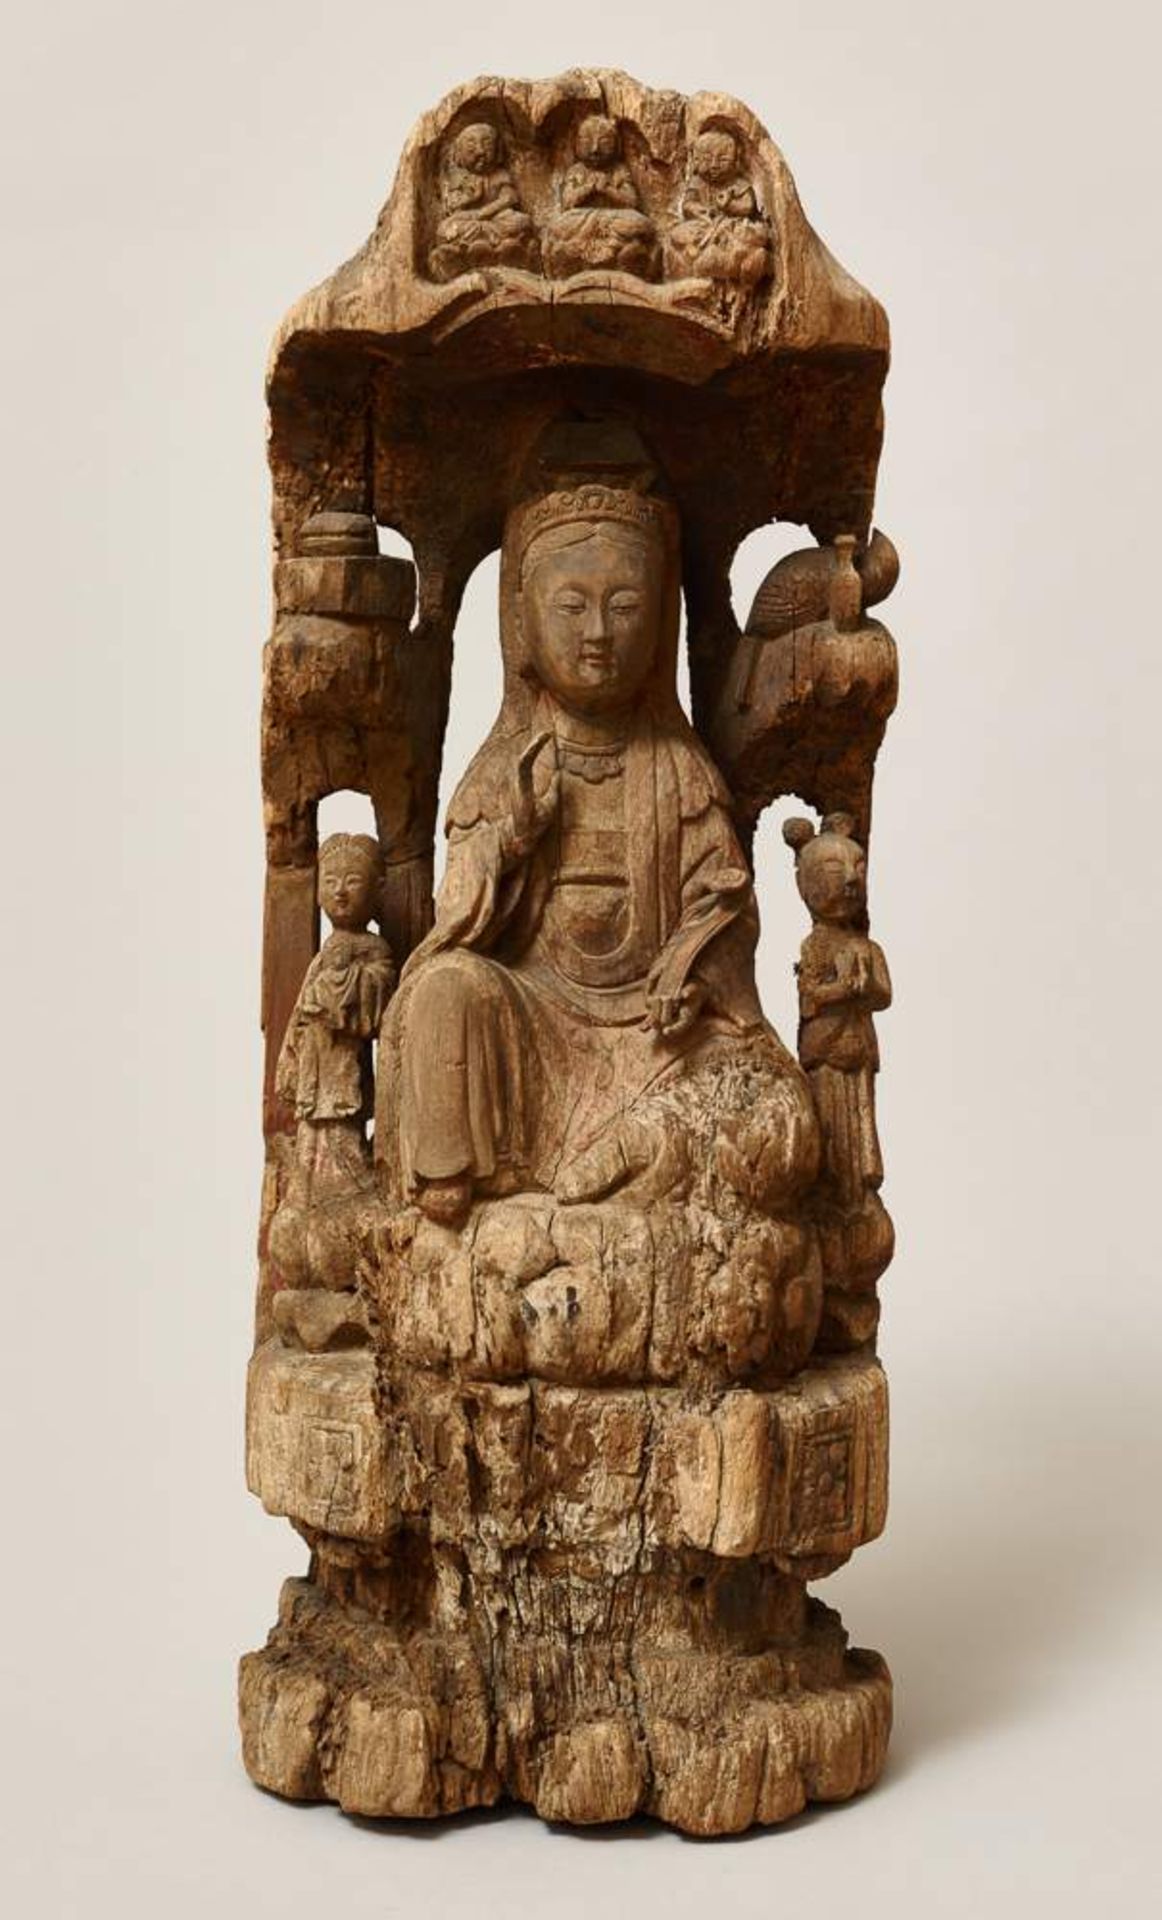 GÖTTIN GUANYIN MIT BEGLEITFIGURENHolz. China, Qing-Dynastie, 17. bis 18. Jh.Altersgesehen